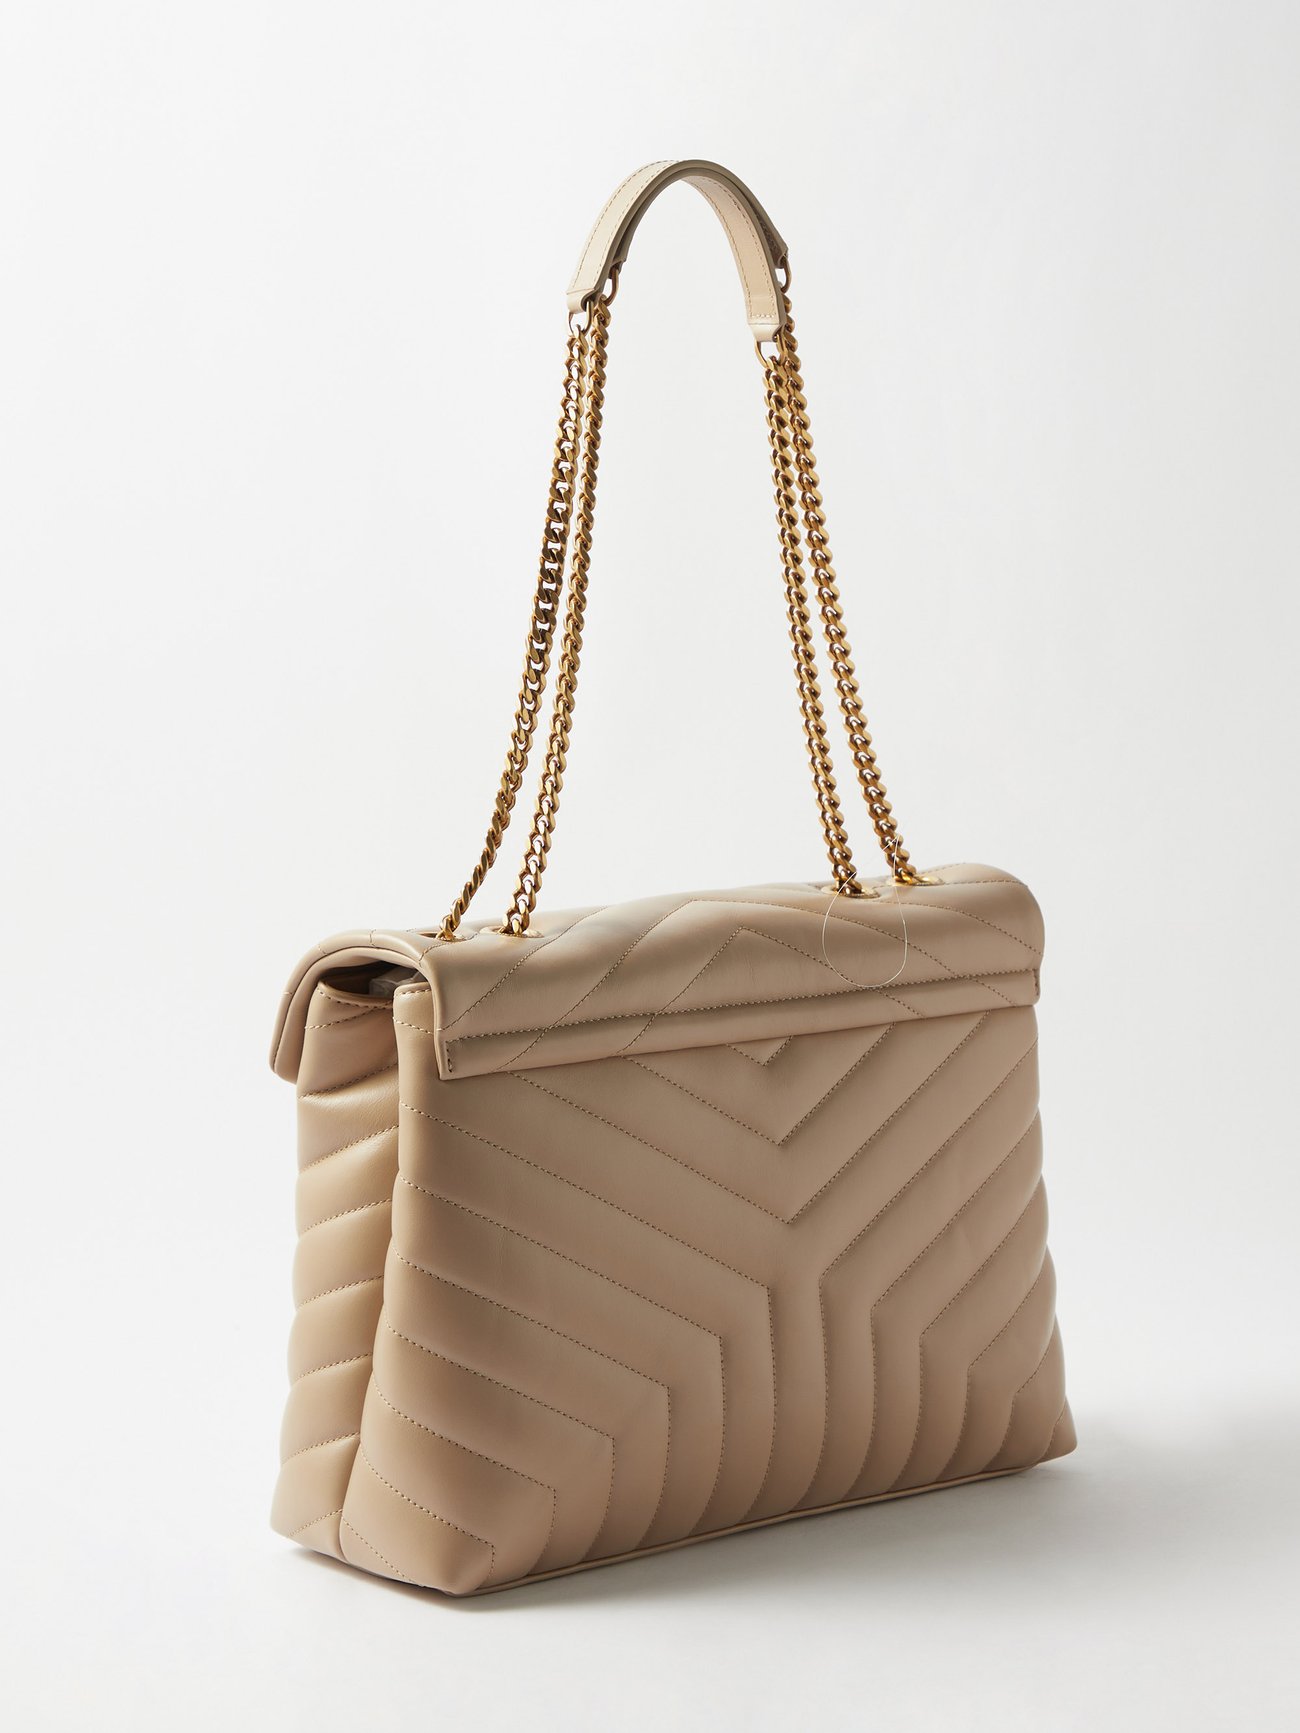 Beige Loulou medium quilted-leather shoulder bag, Saint Laurent